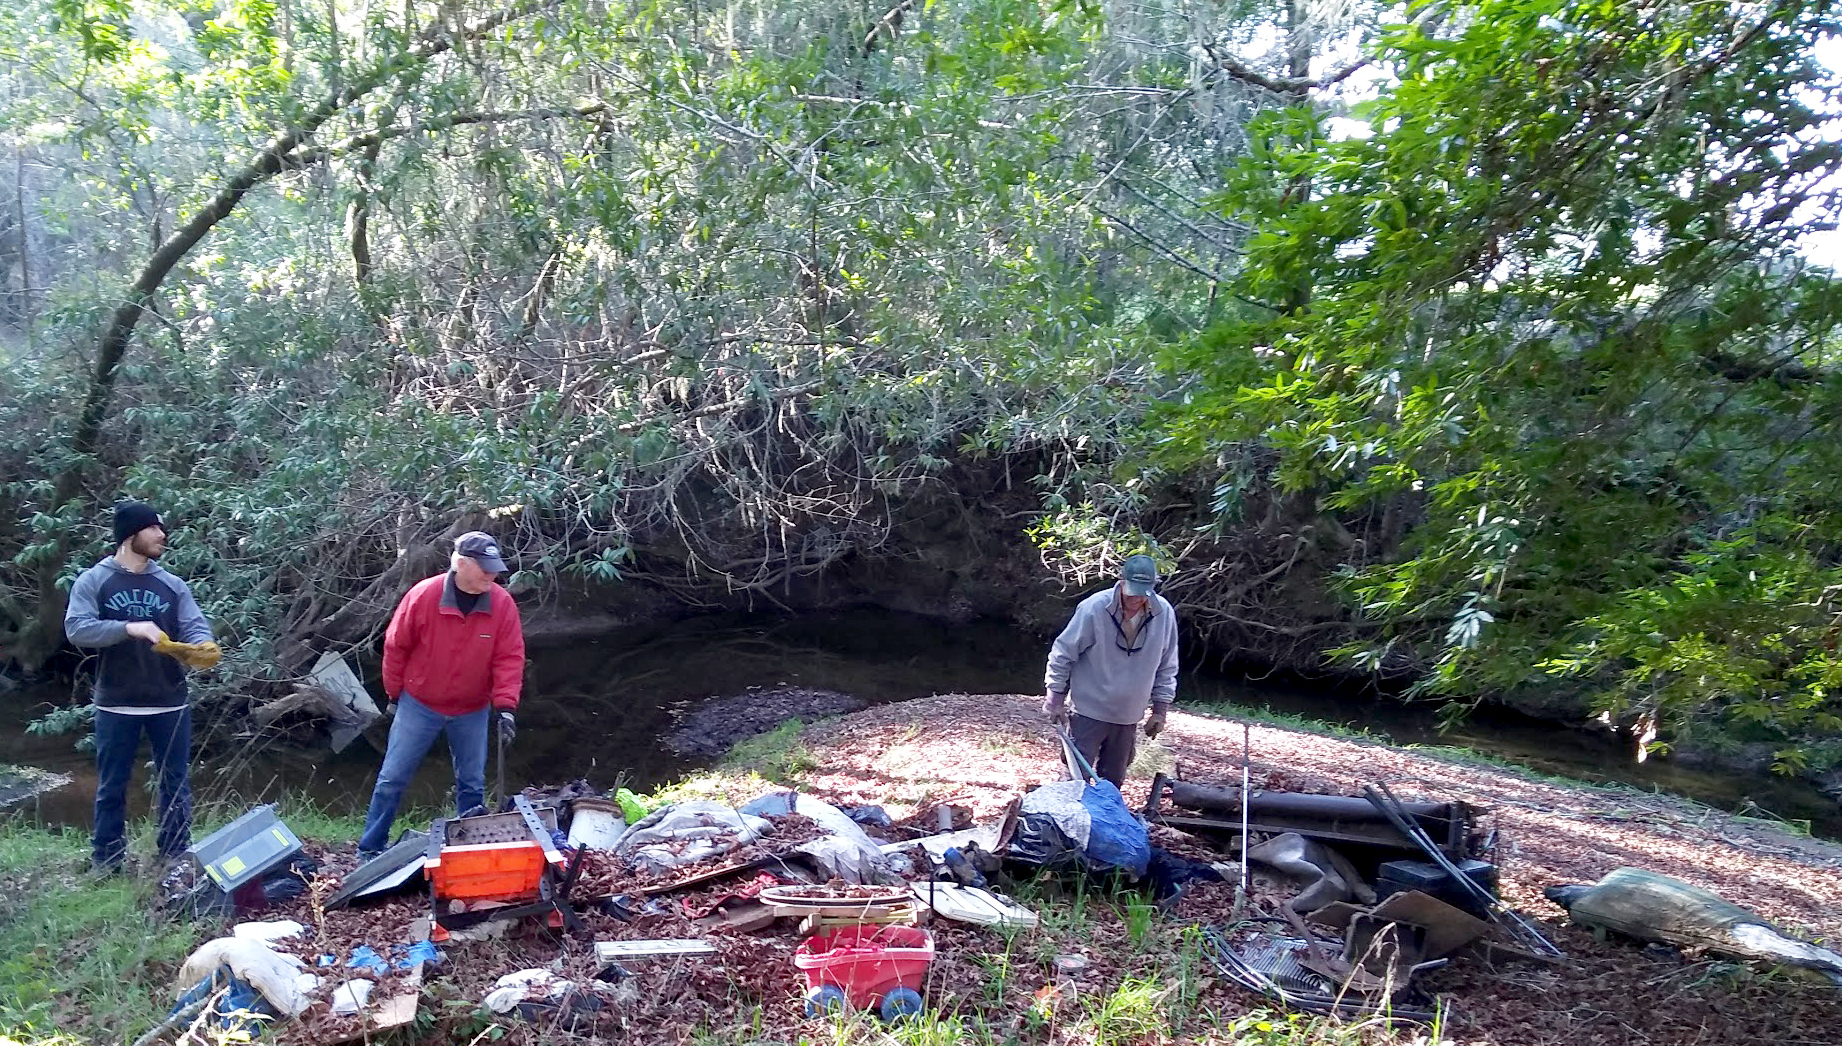 Volunteers Prevent Harmful Debris From Polluting Lagunitas Creek During Storm